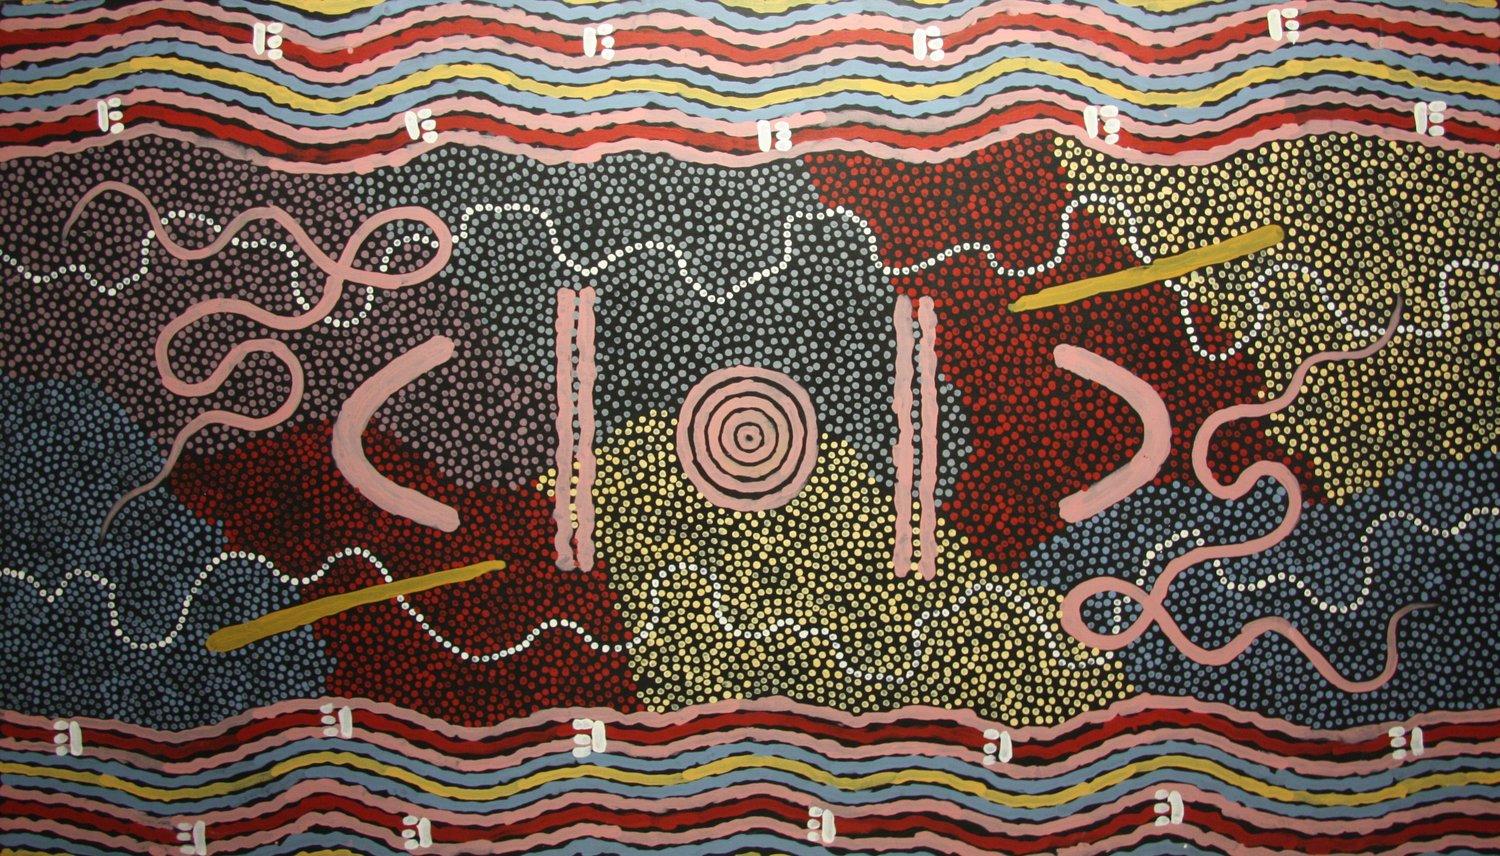 Clifford Possum Tjapaltjarri Landscape Painting - 'Possum Dreaming at Napperby' Australian Aboriginal Art by Clifford Possum